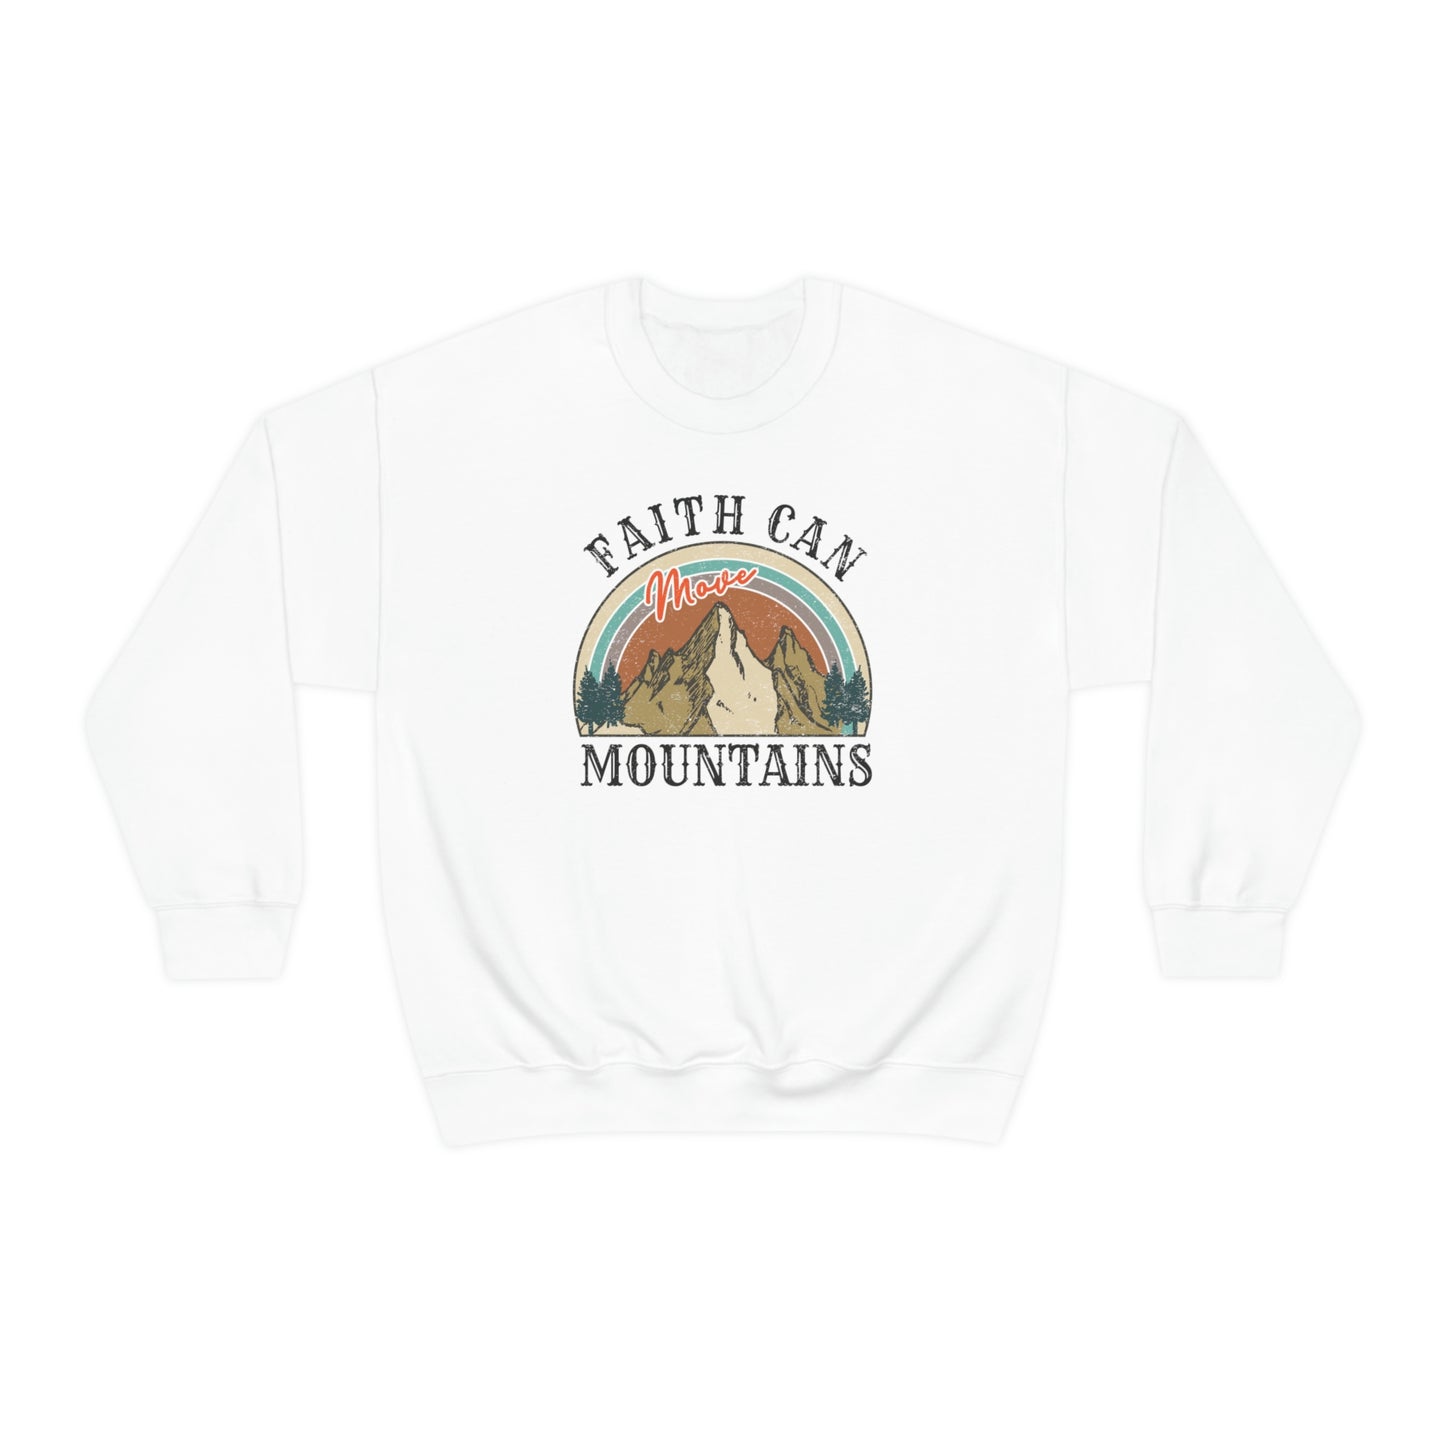 "Faith Can Move Mountains" Unisex Heavy Blend™ Crewneck Sweatshirt